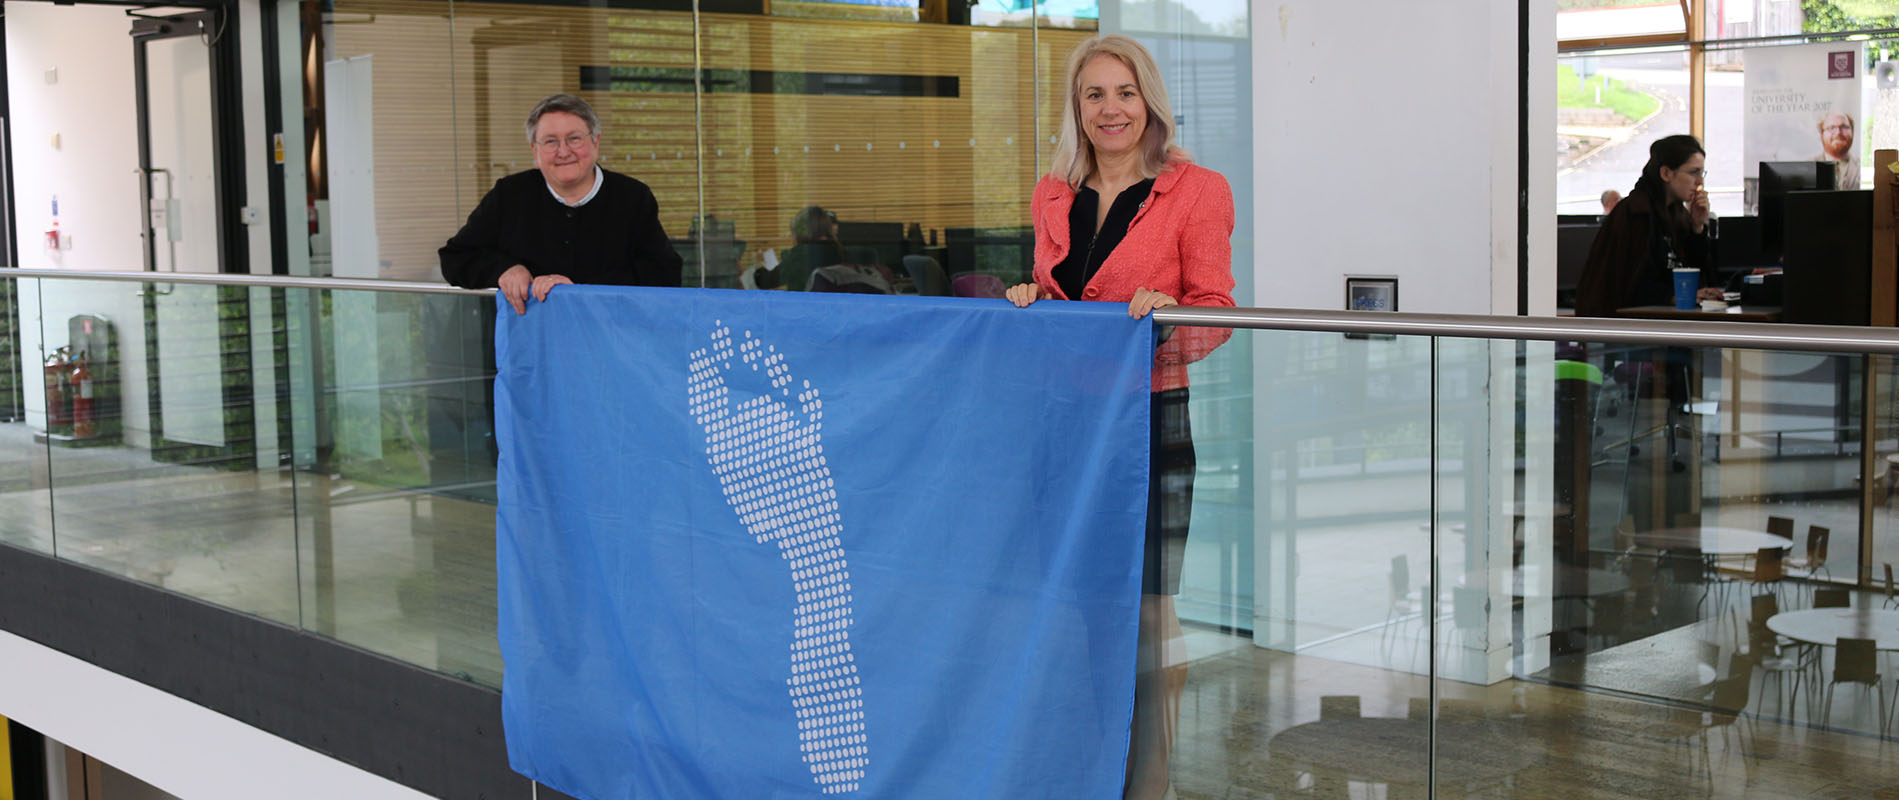 Joy Carter and Liz Stuart holding the blue footprint flag